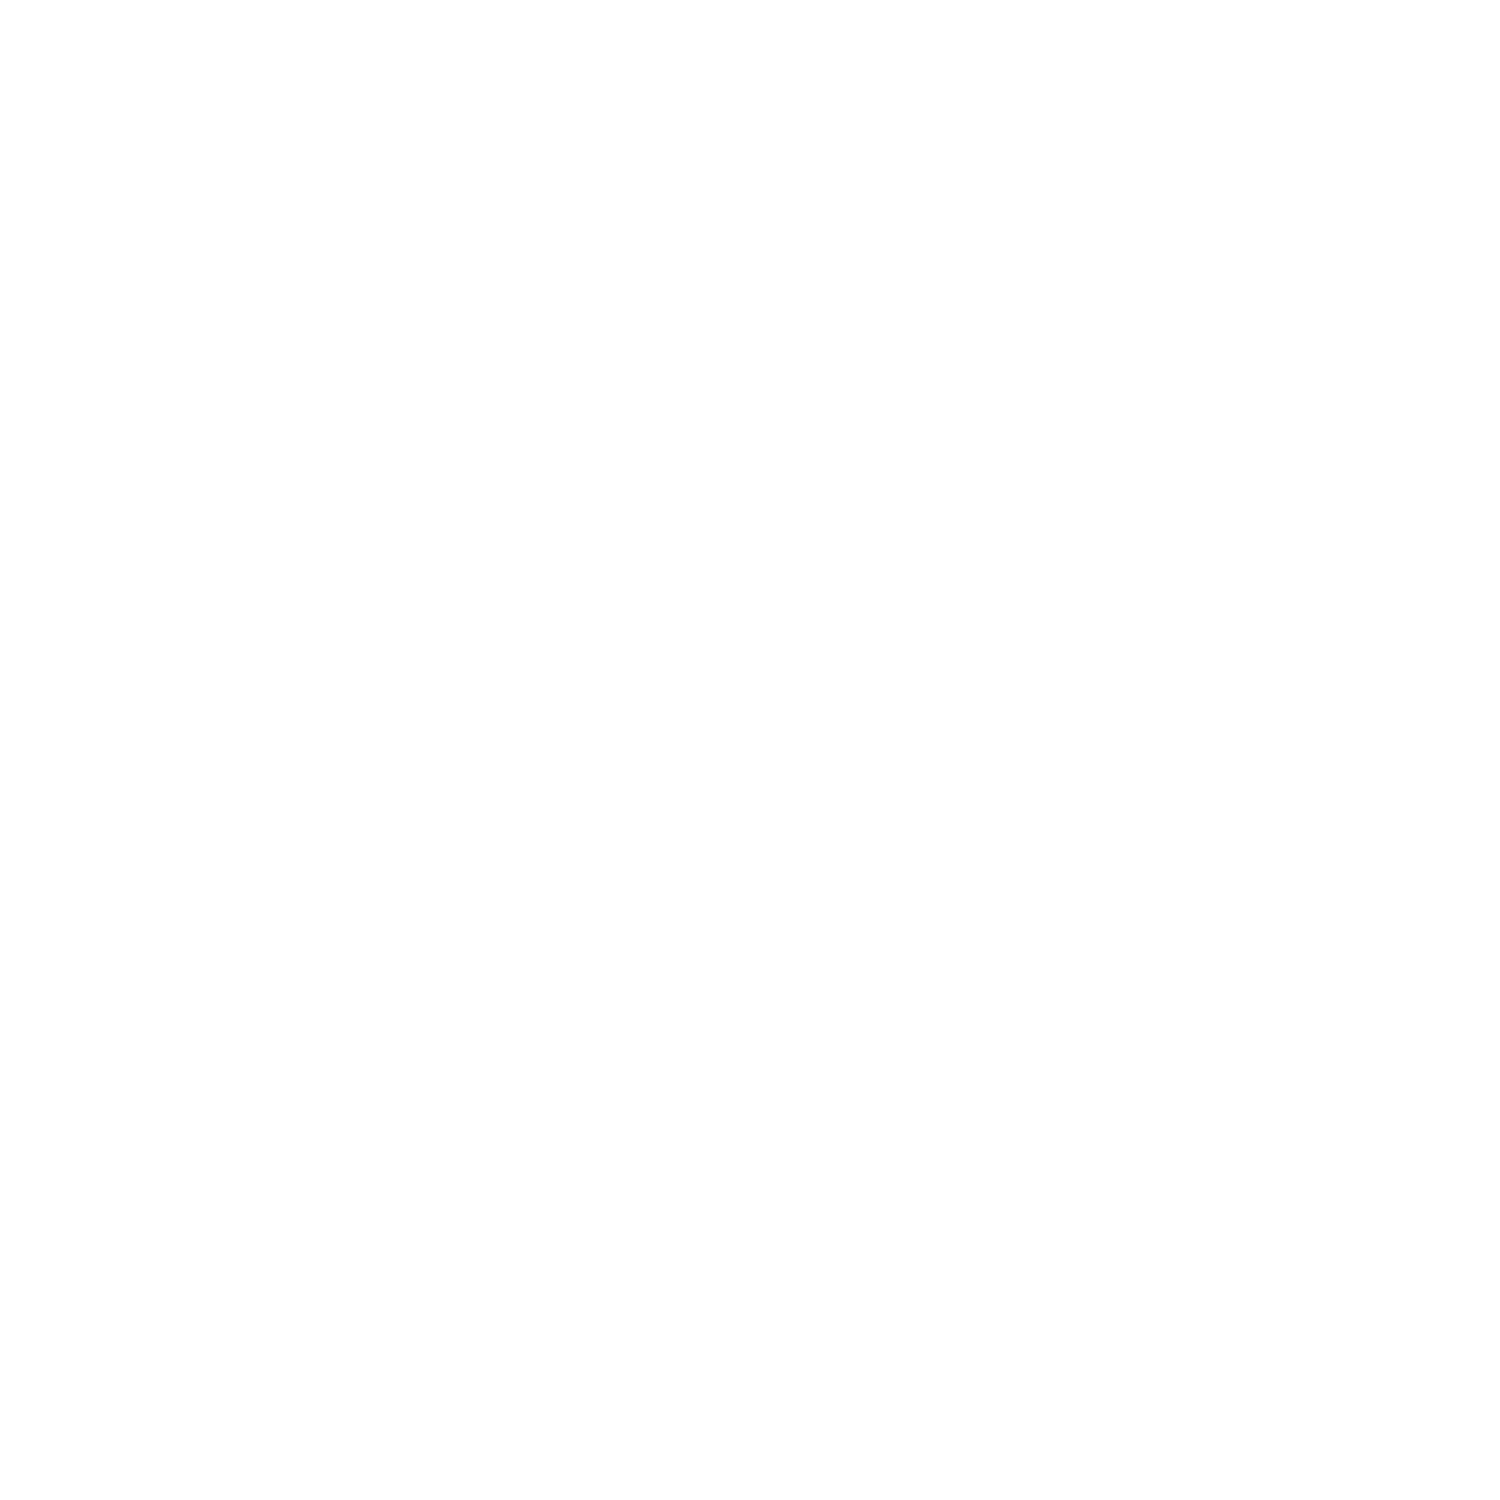 Janet Stickmon Consulting